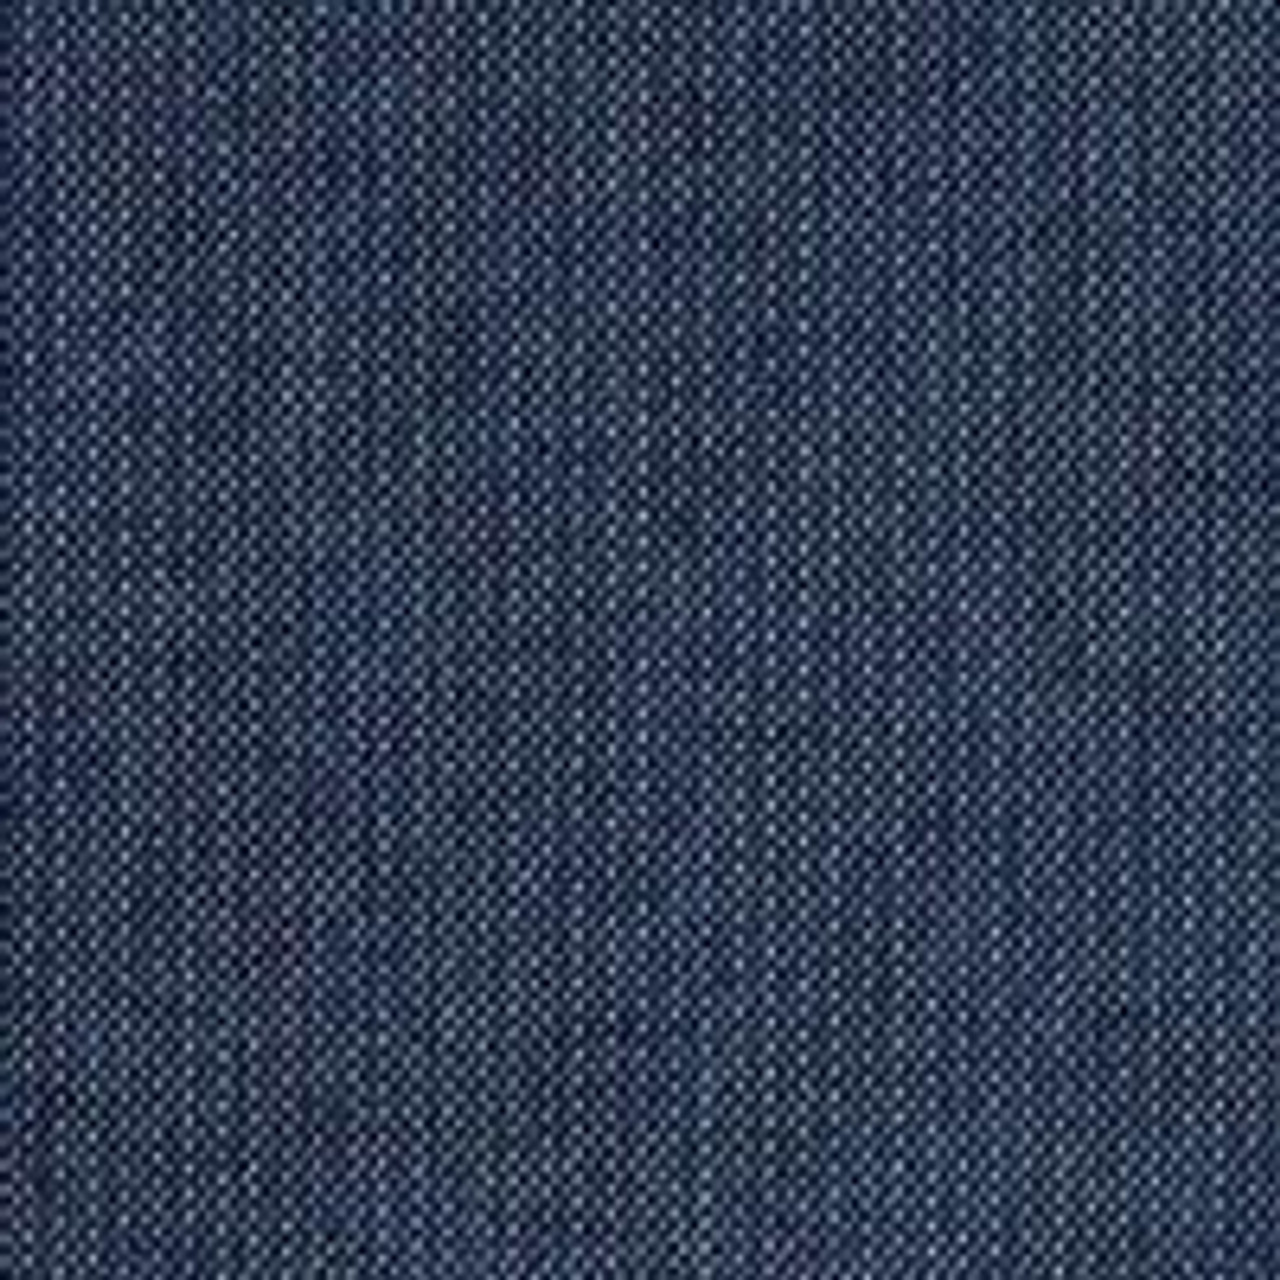 Sunbrella Fabric Spectrum Dove Solid #48032 54wide Per Yard Outdoor/I –  Southern Textiles